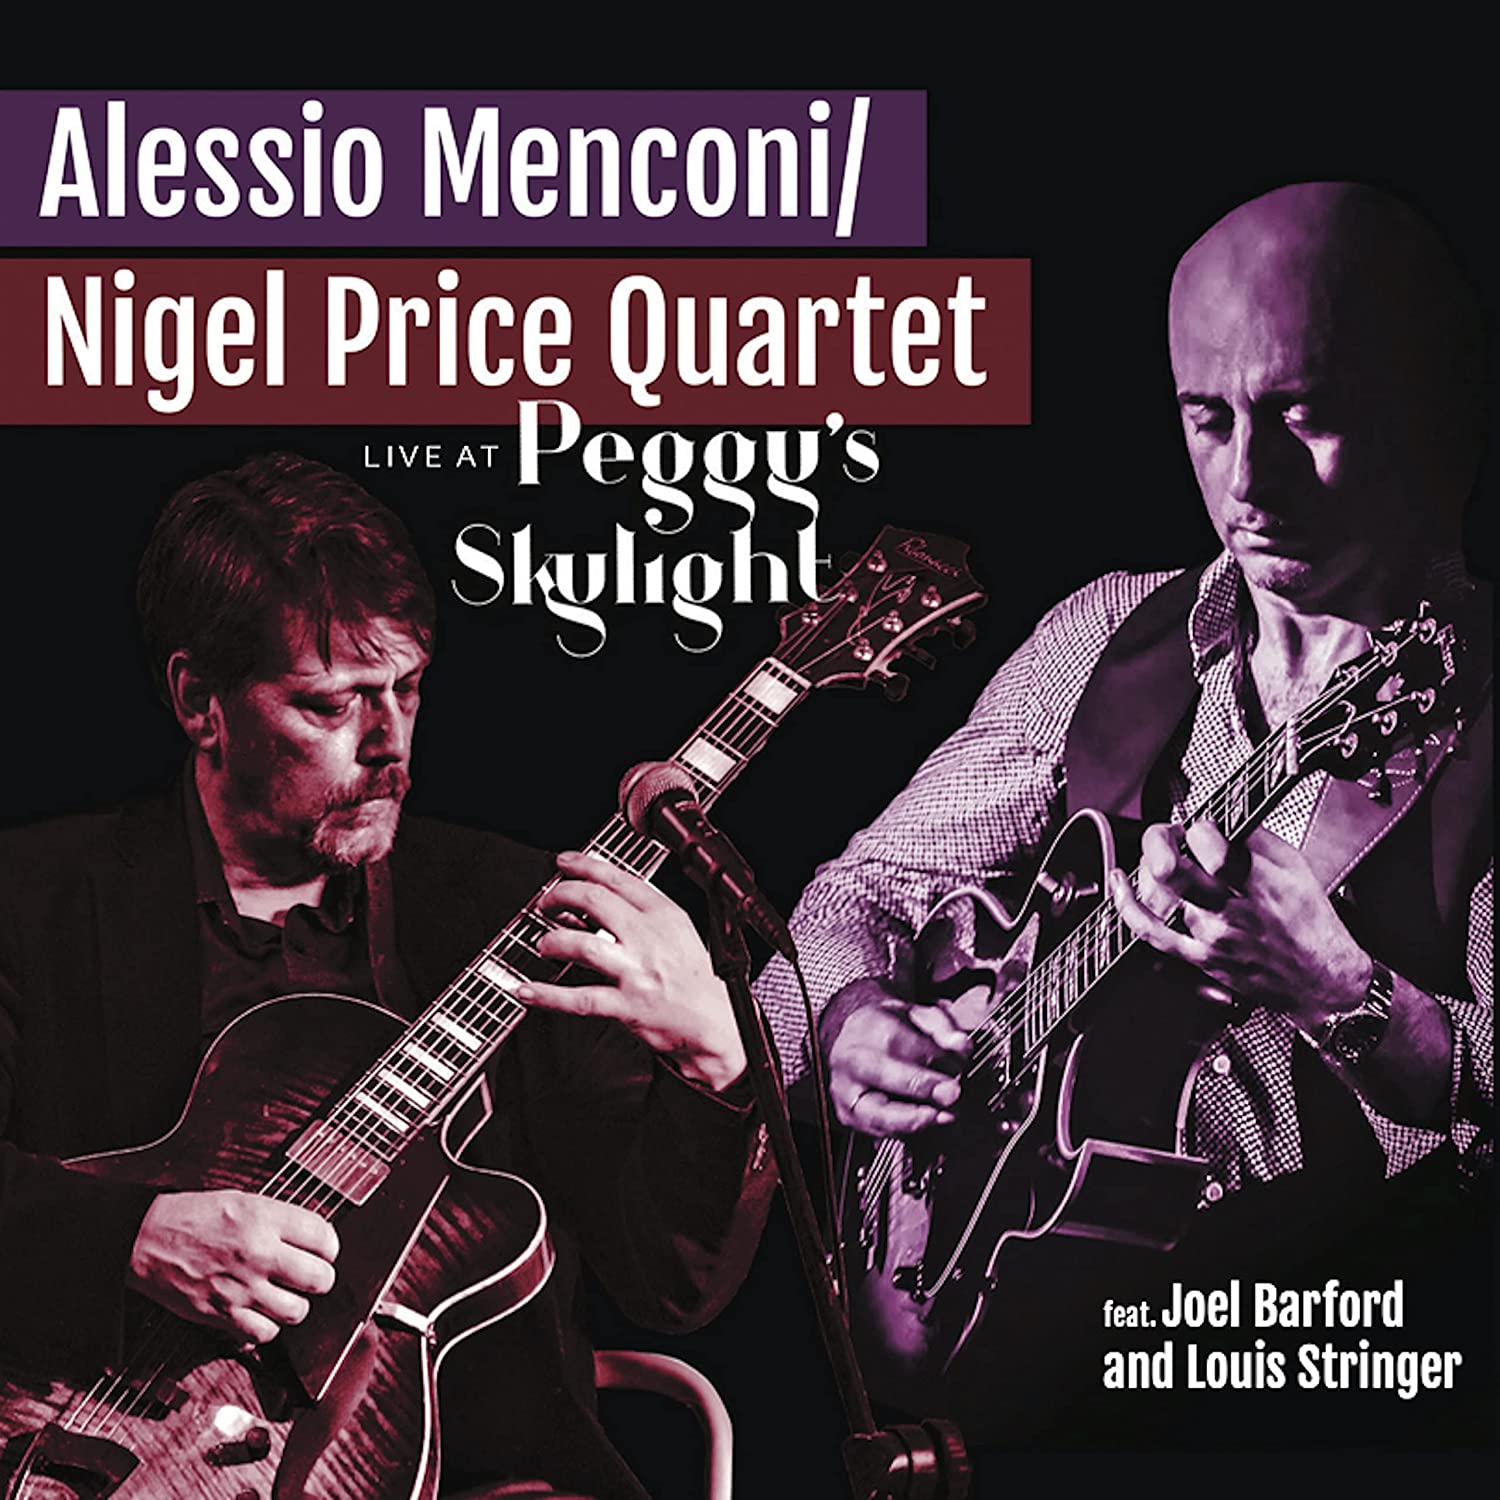 ALESSIO MENCONI - Alessio Menconi - Nigel Price Quartet : Live At Peggy's Skylight cover 